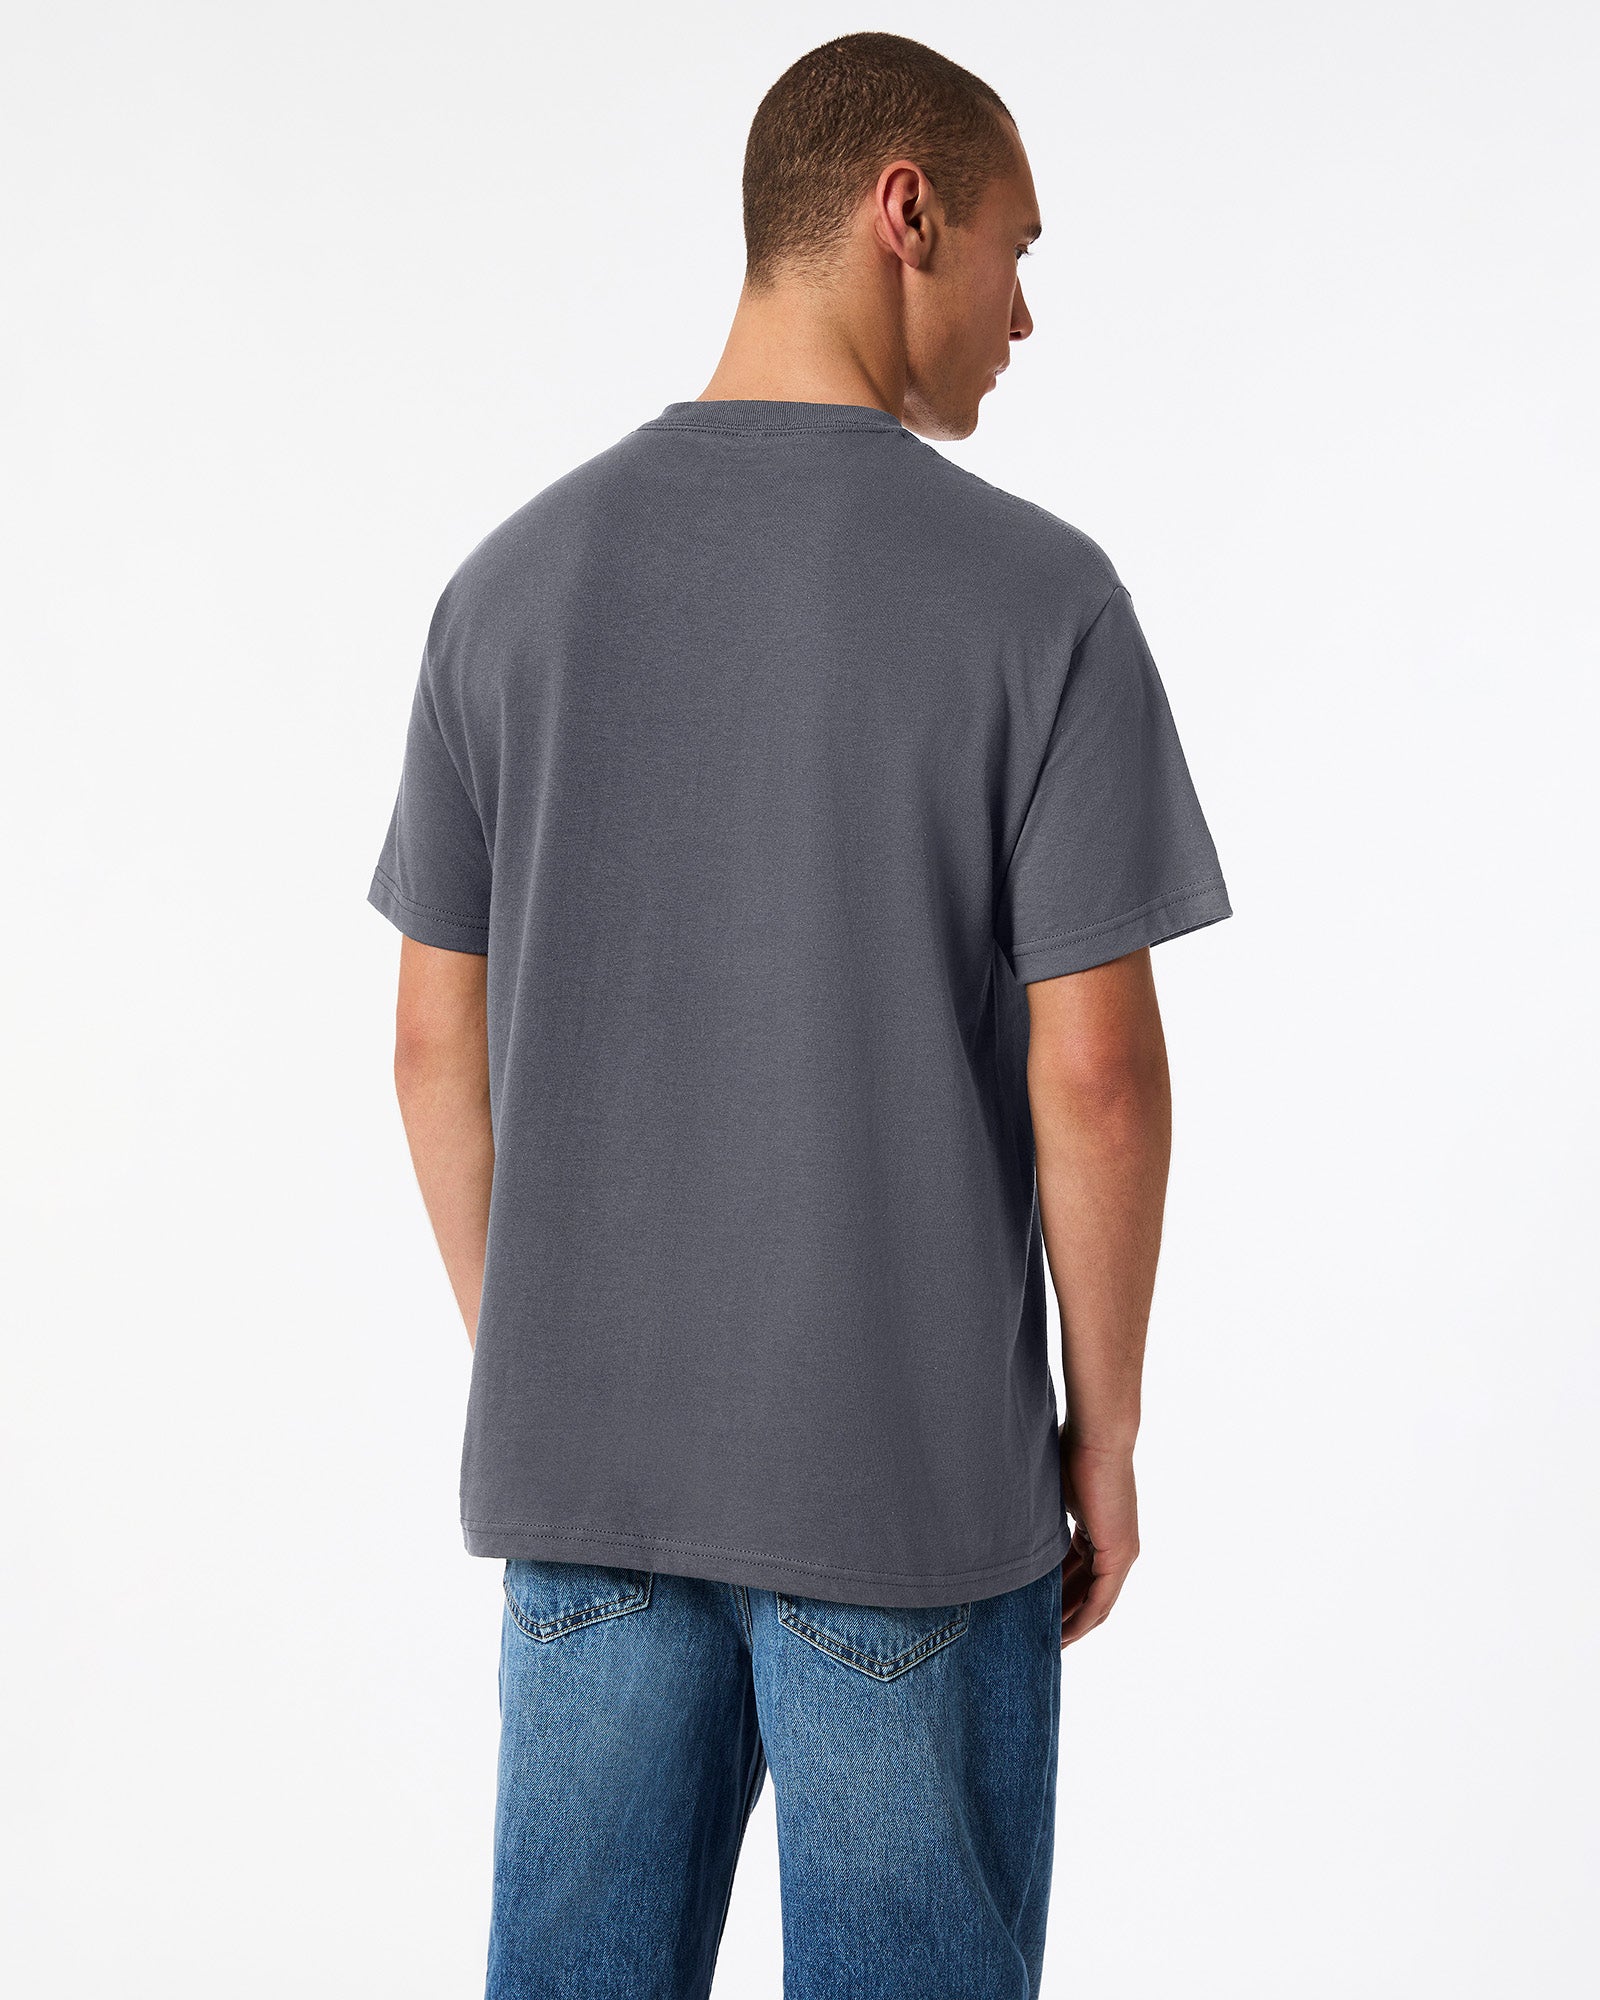 Heavyweight Unisex T-Shirt - Charcoal